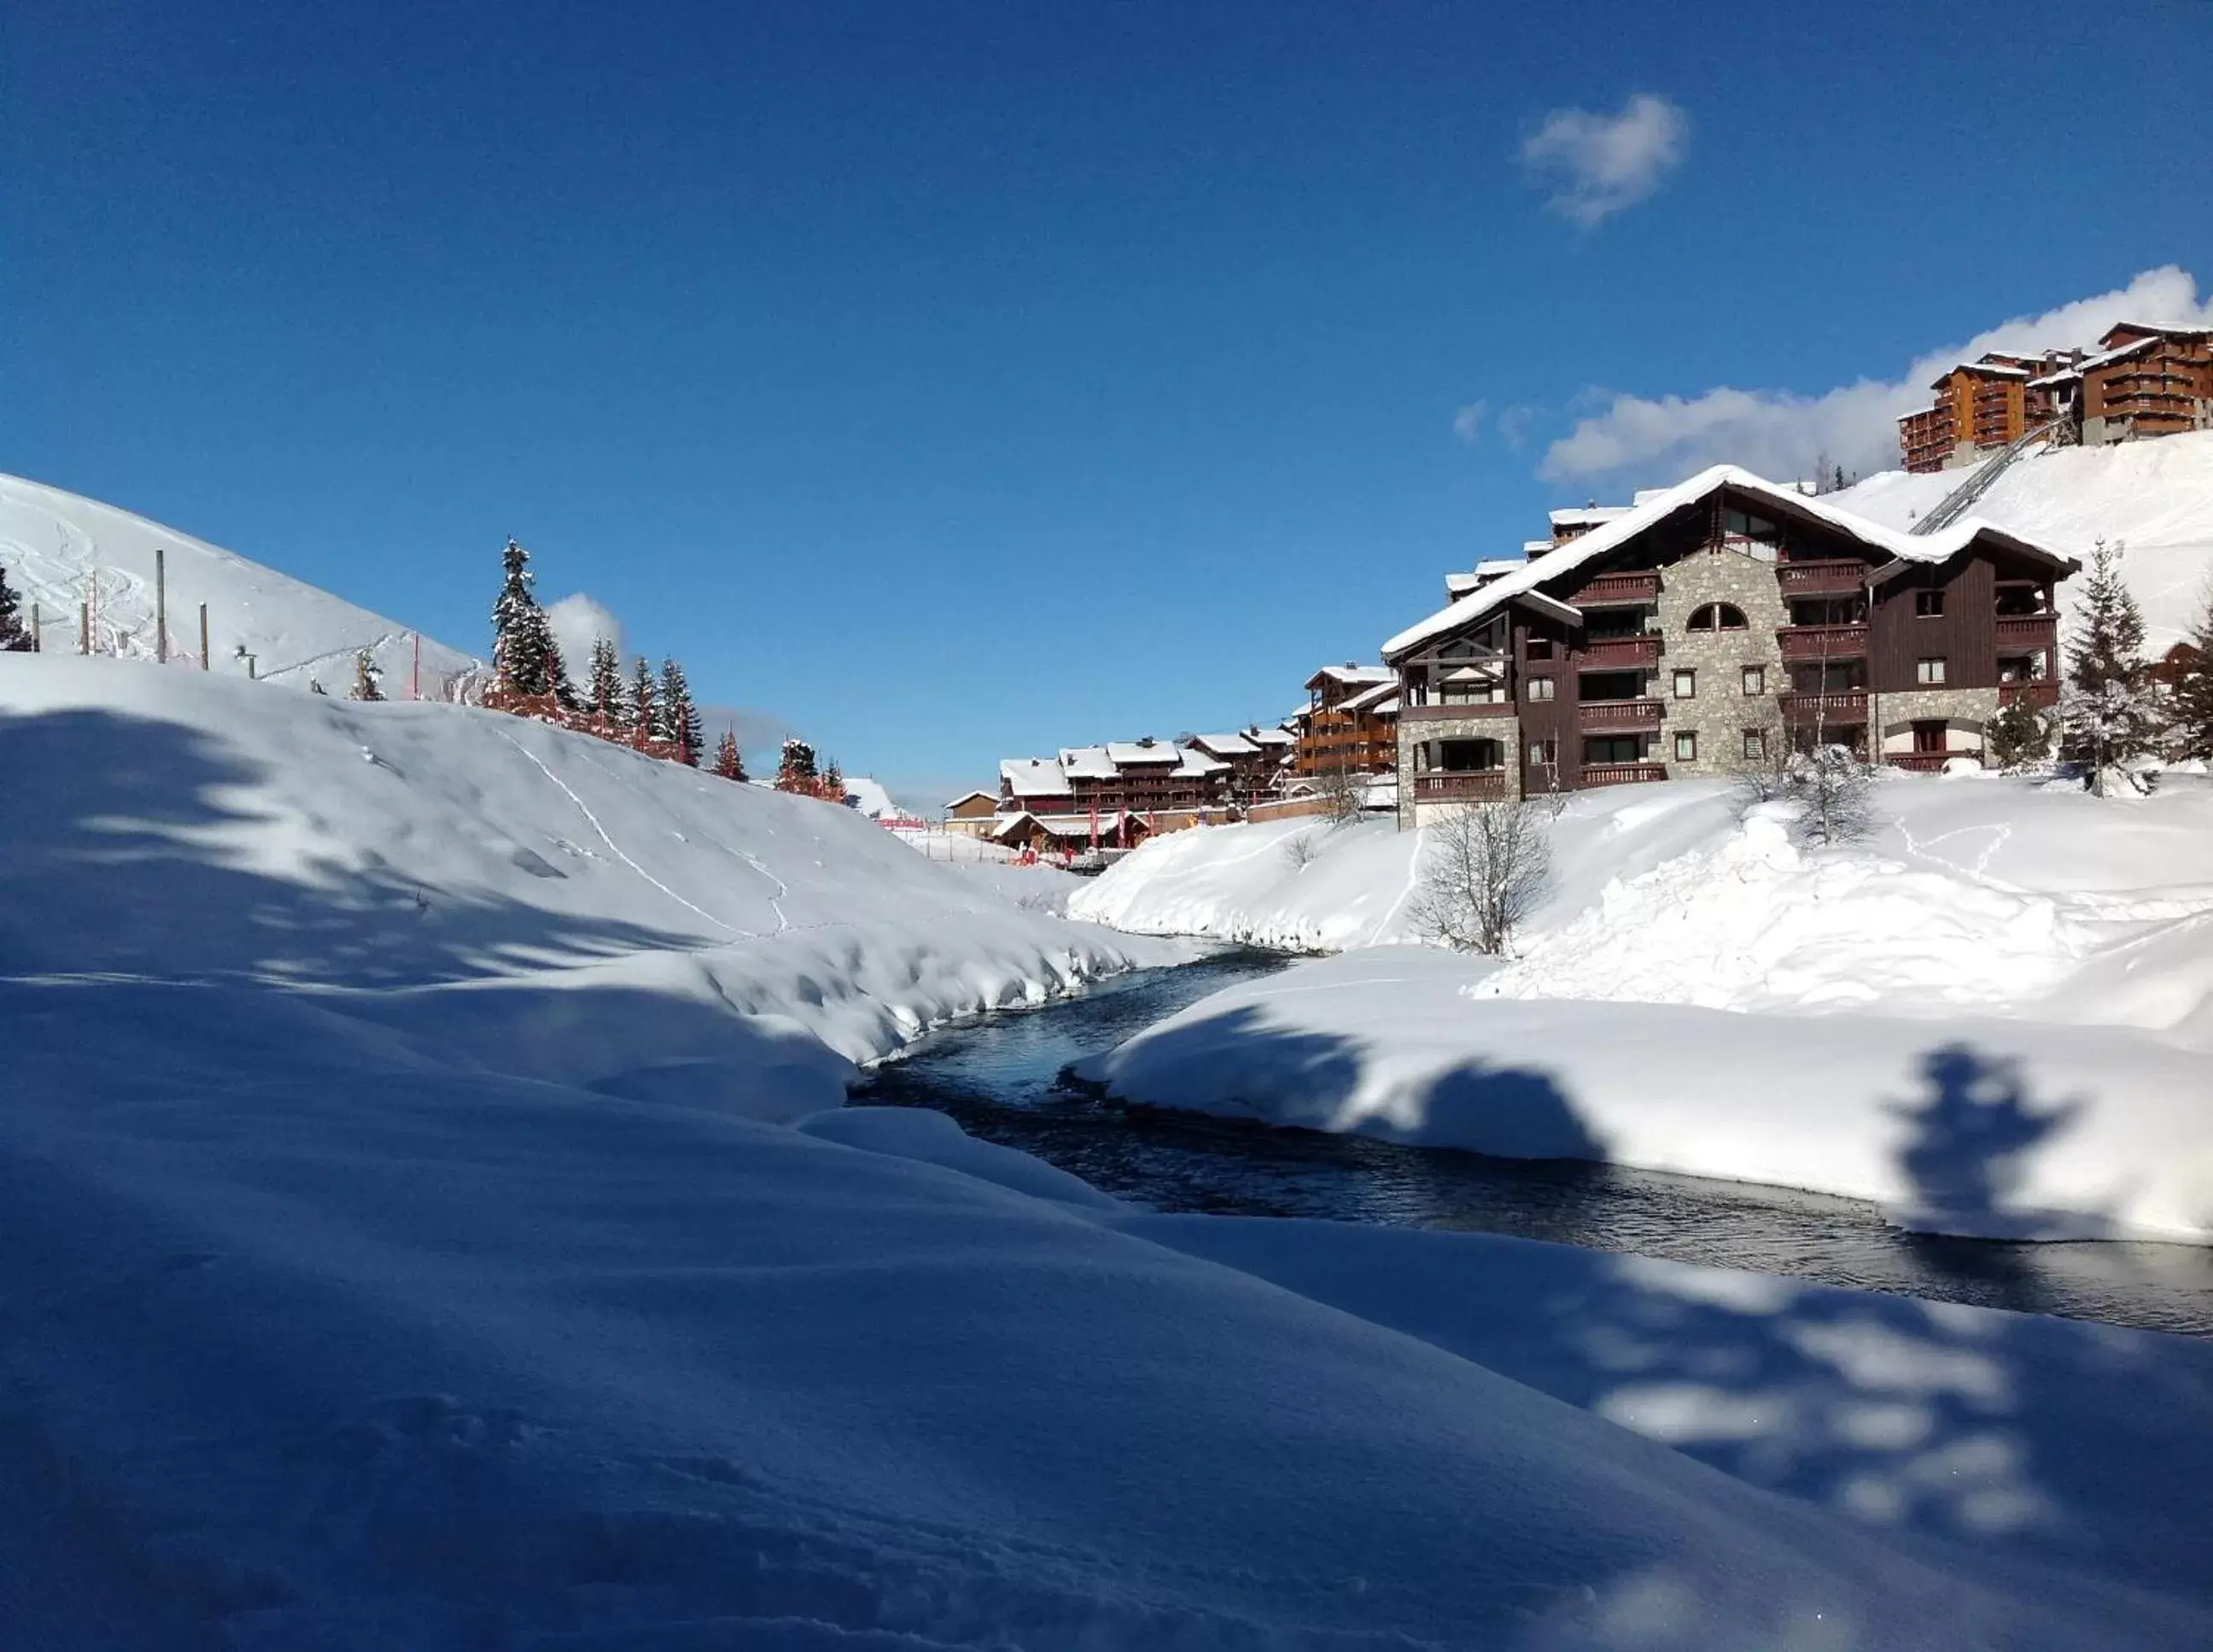 Off site, Winter in Hotel Mont Vallon